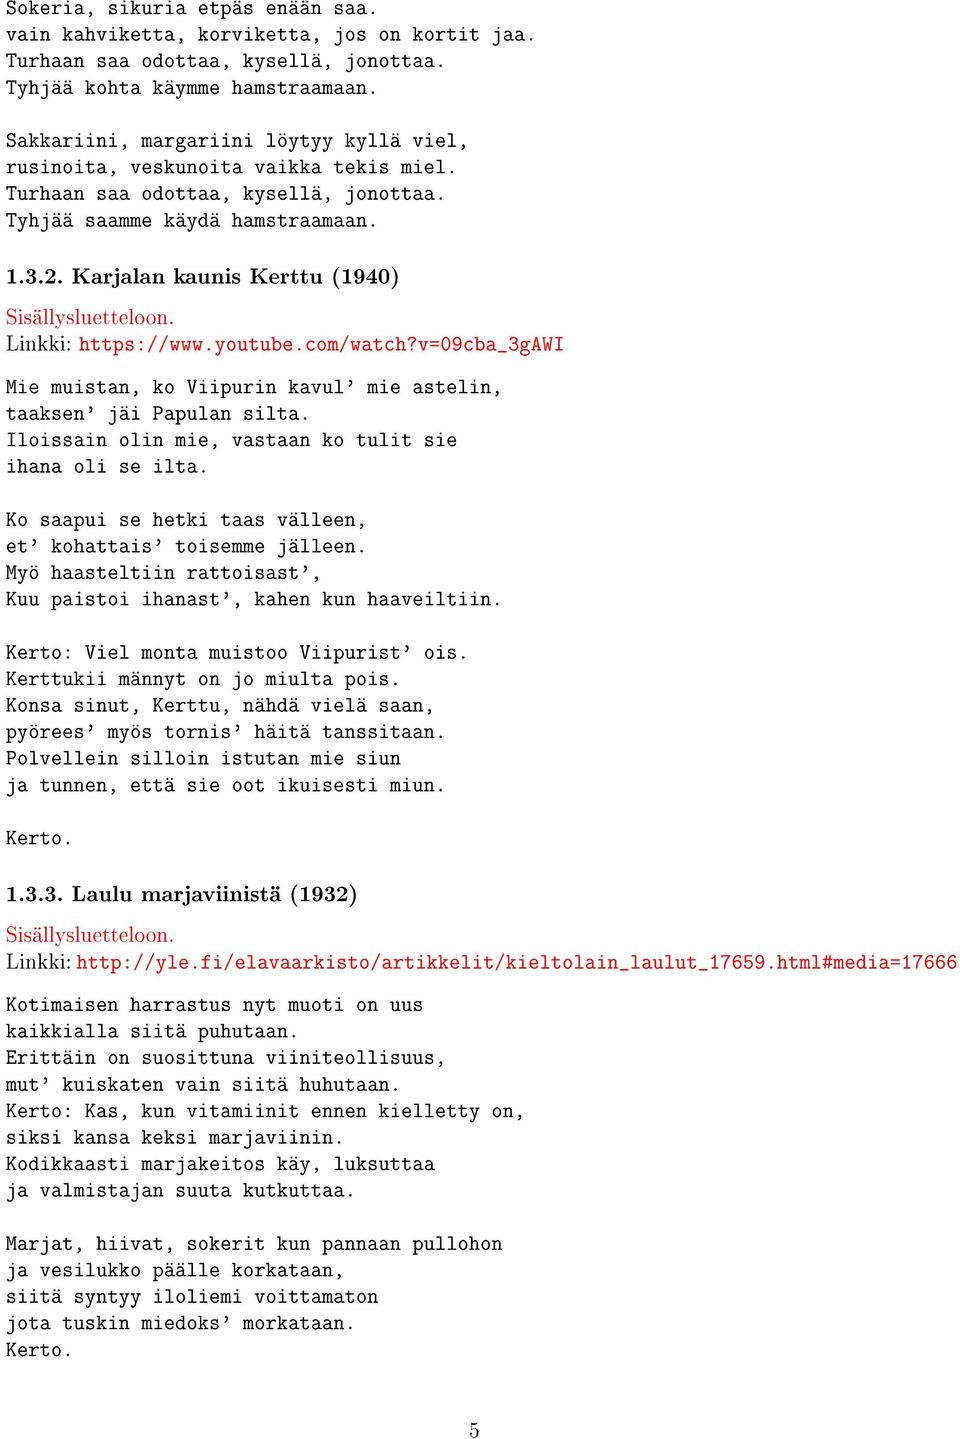 Karjalan kaunis Kerttu (1940) Linkki: https://www.youtube.com/watch?v=09cba_3gawi Mie muistan, ko Viipurin kavul' mie astelin, taaksen' jäi Papulan silta.